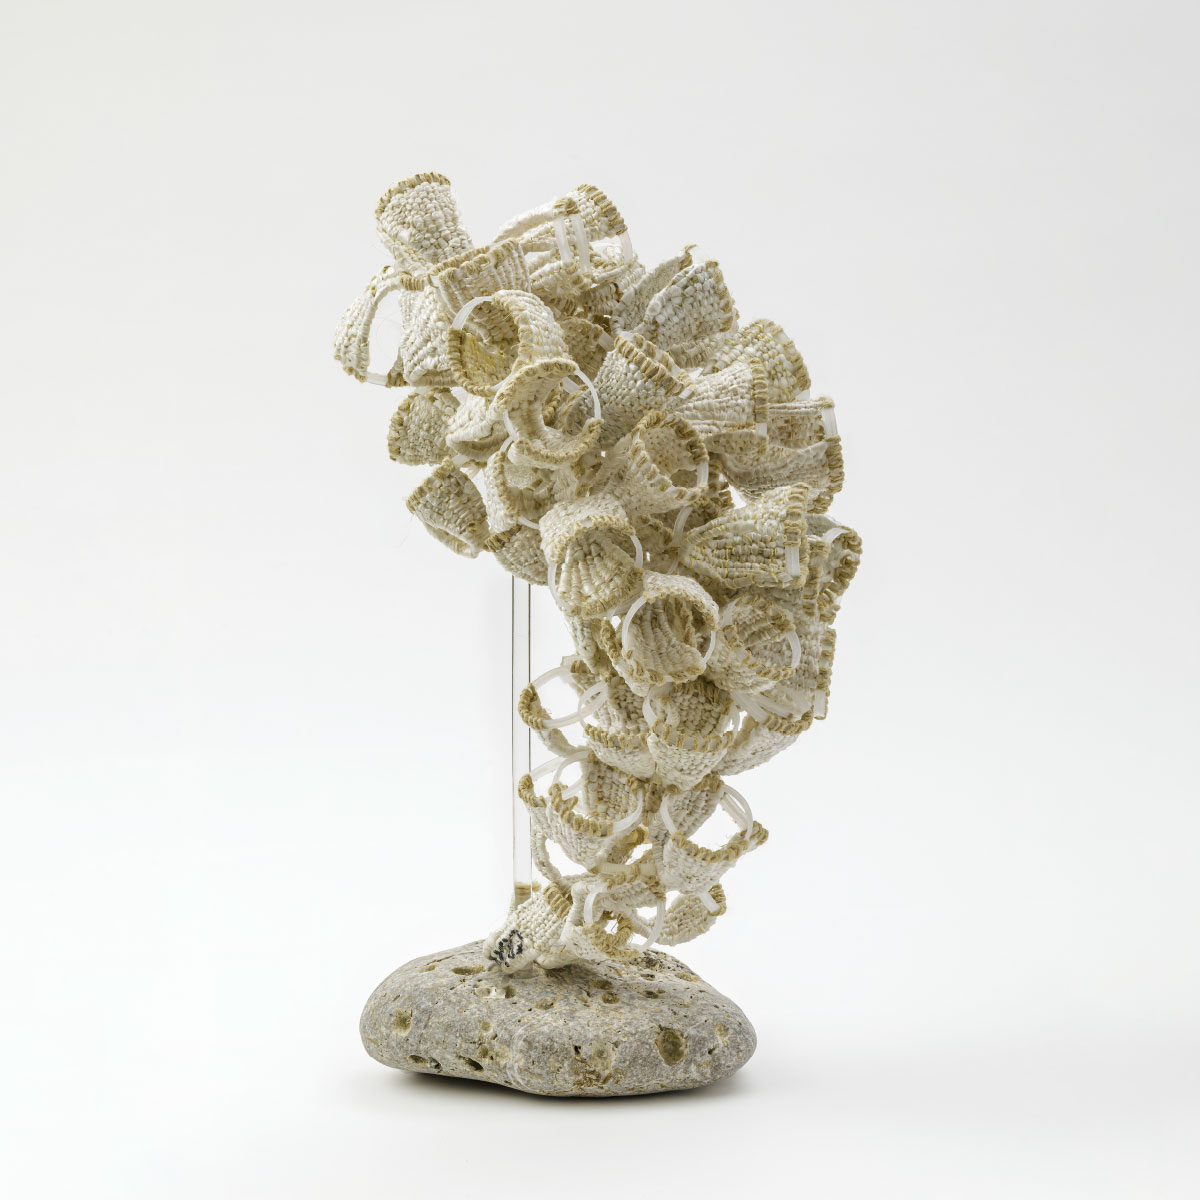 Cinzia Li Volsi Sculpture Growth plastic bottle rings old shopping bags Italiano Plurale